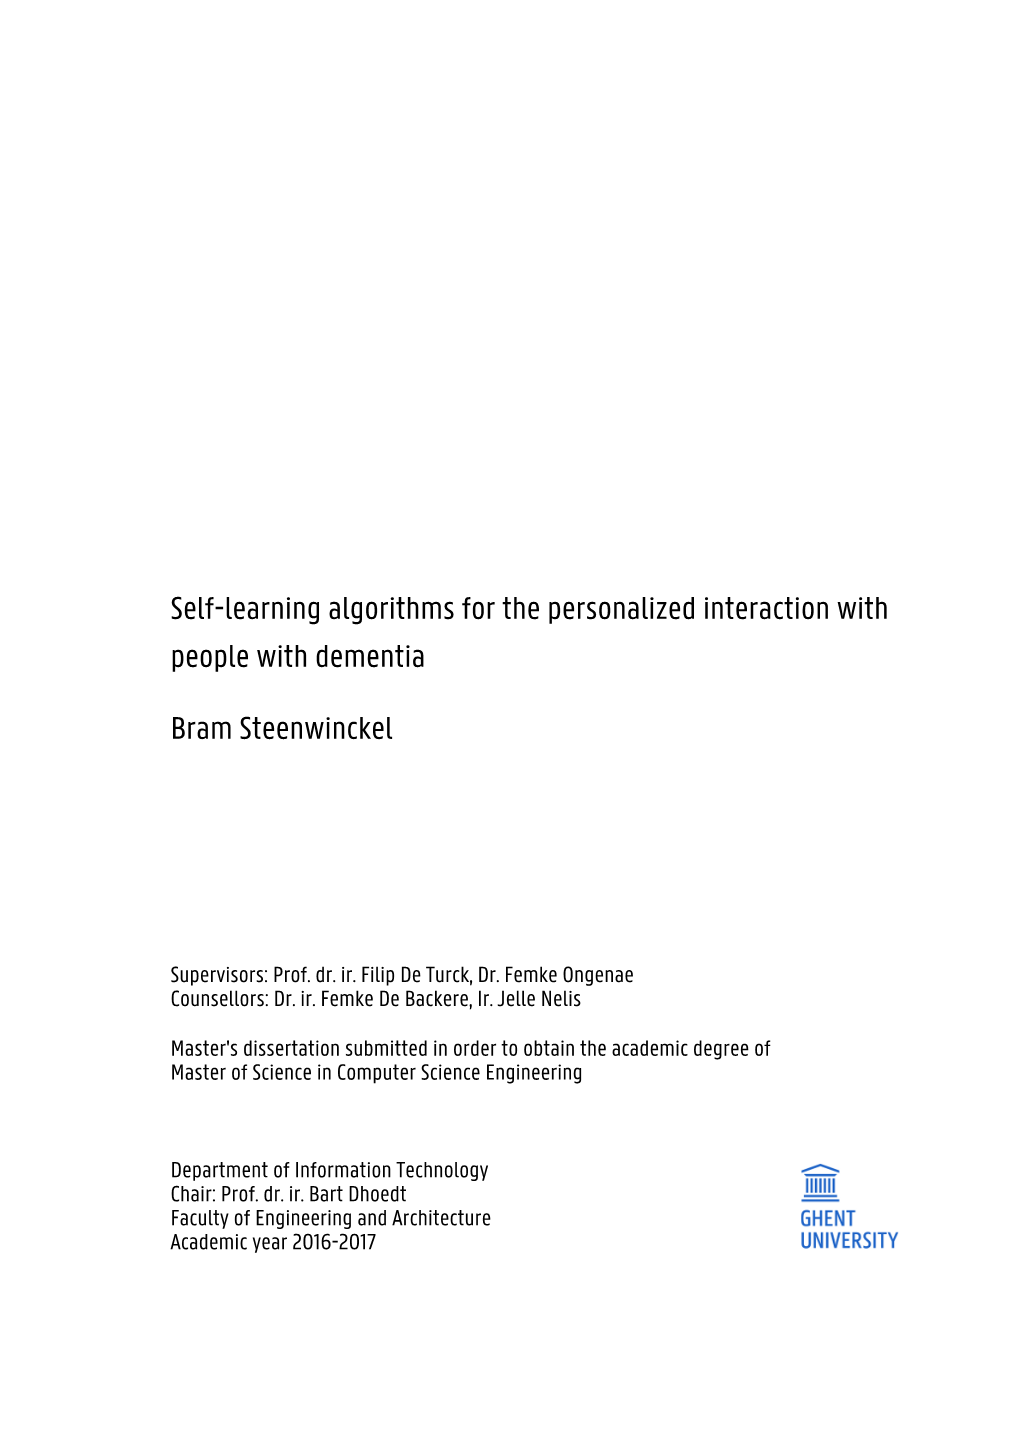 Bram Steenwinckel People with Dementia Self-Learning Algorithms